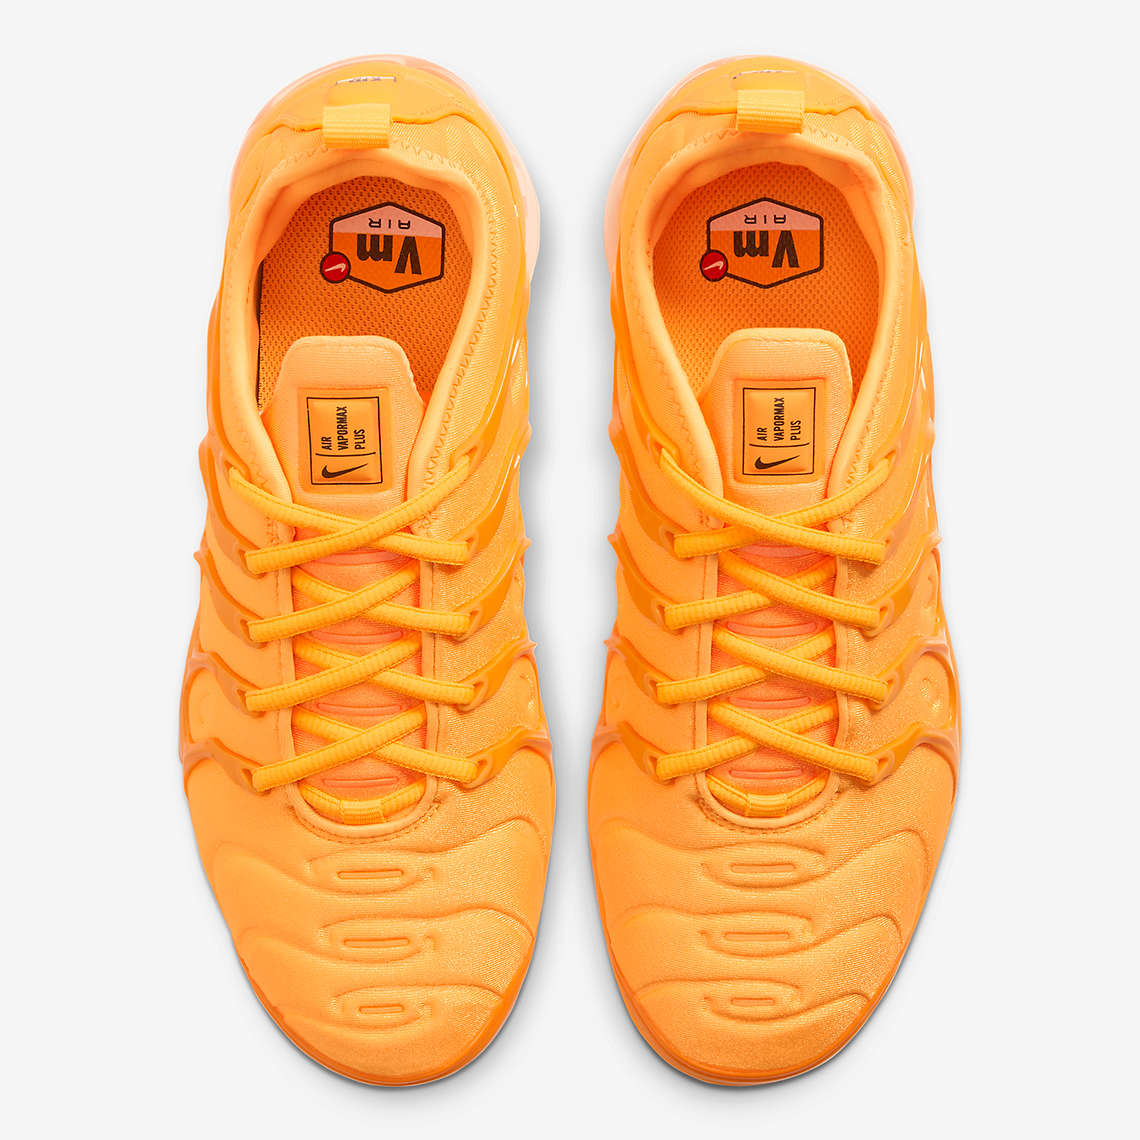 Nike Vapormax Plus Orange Cw7011 800 4